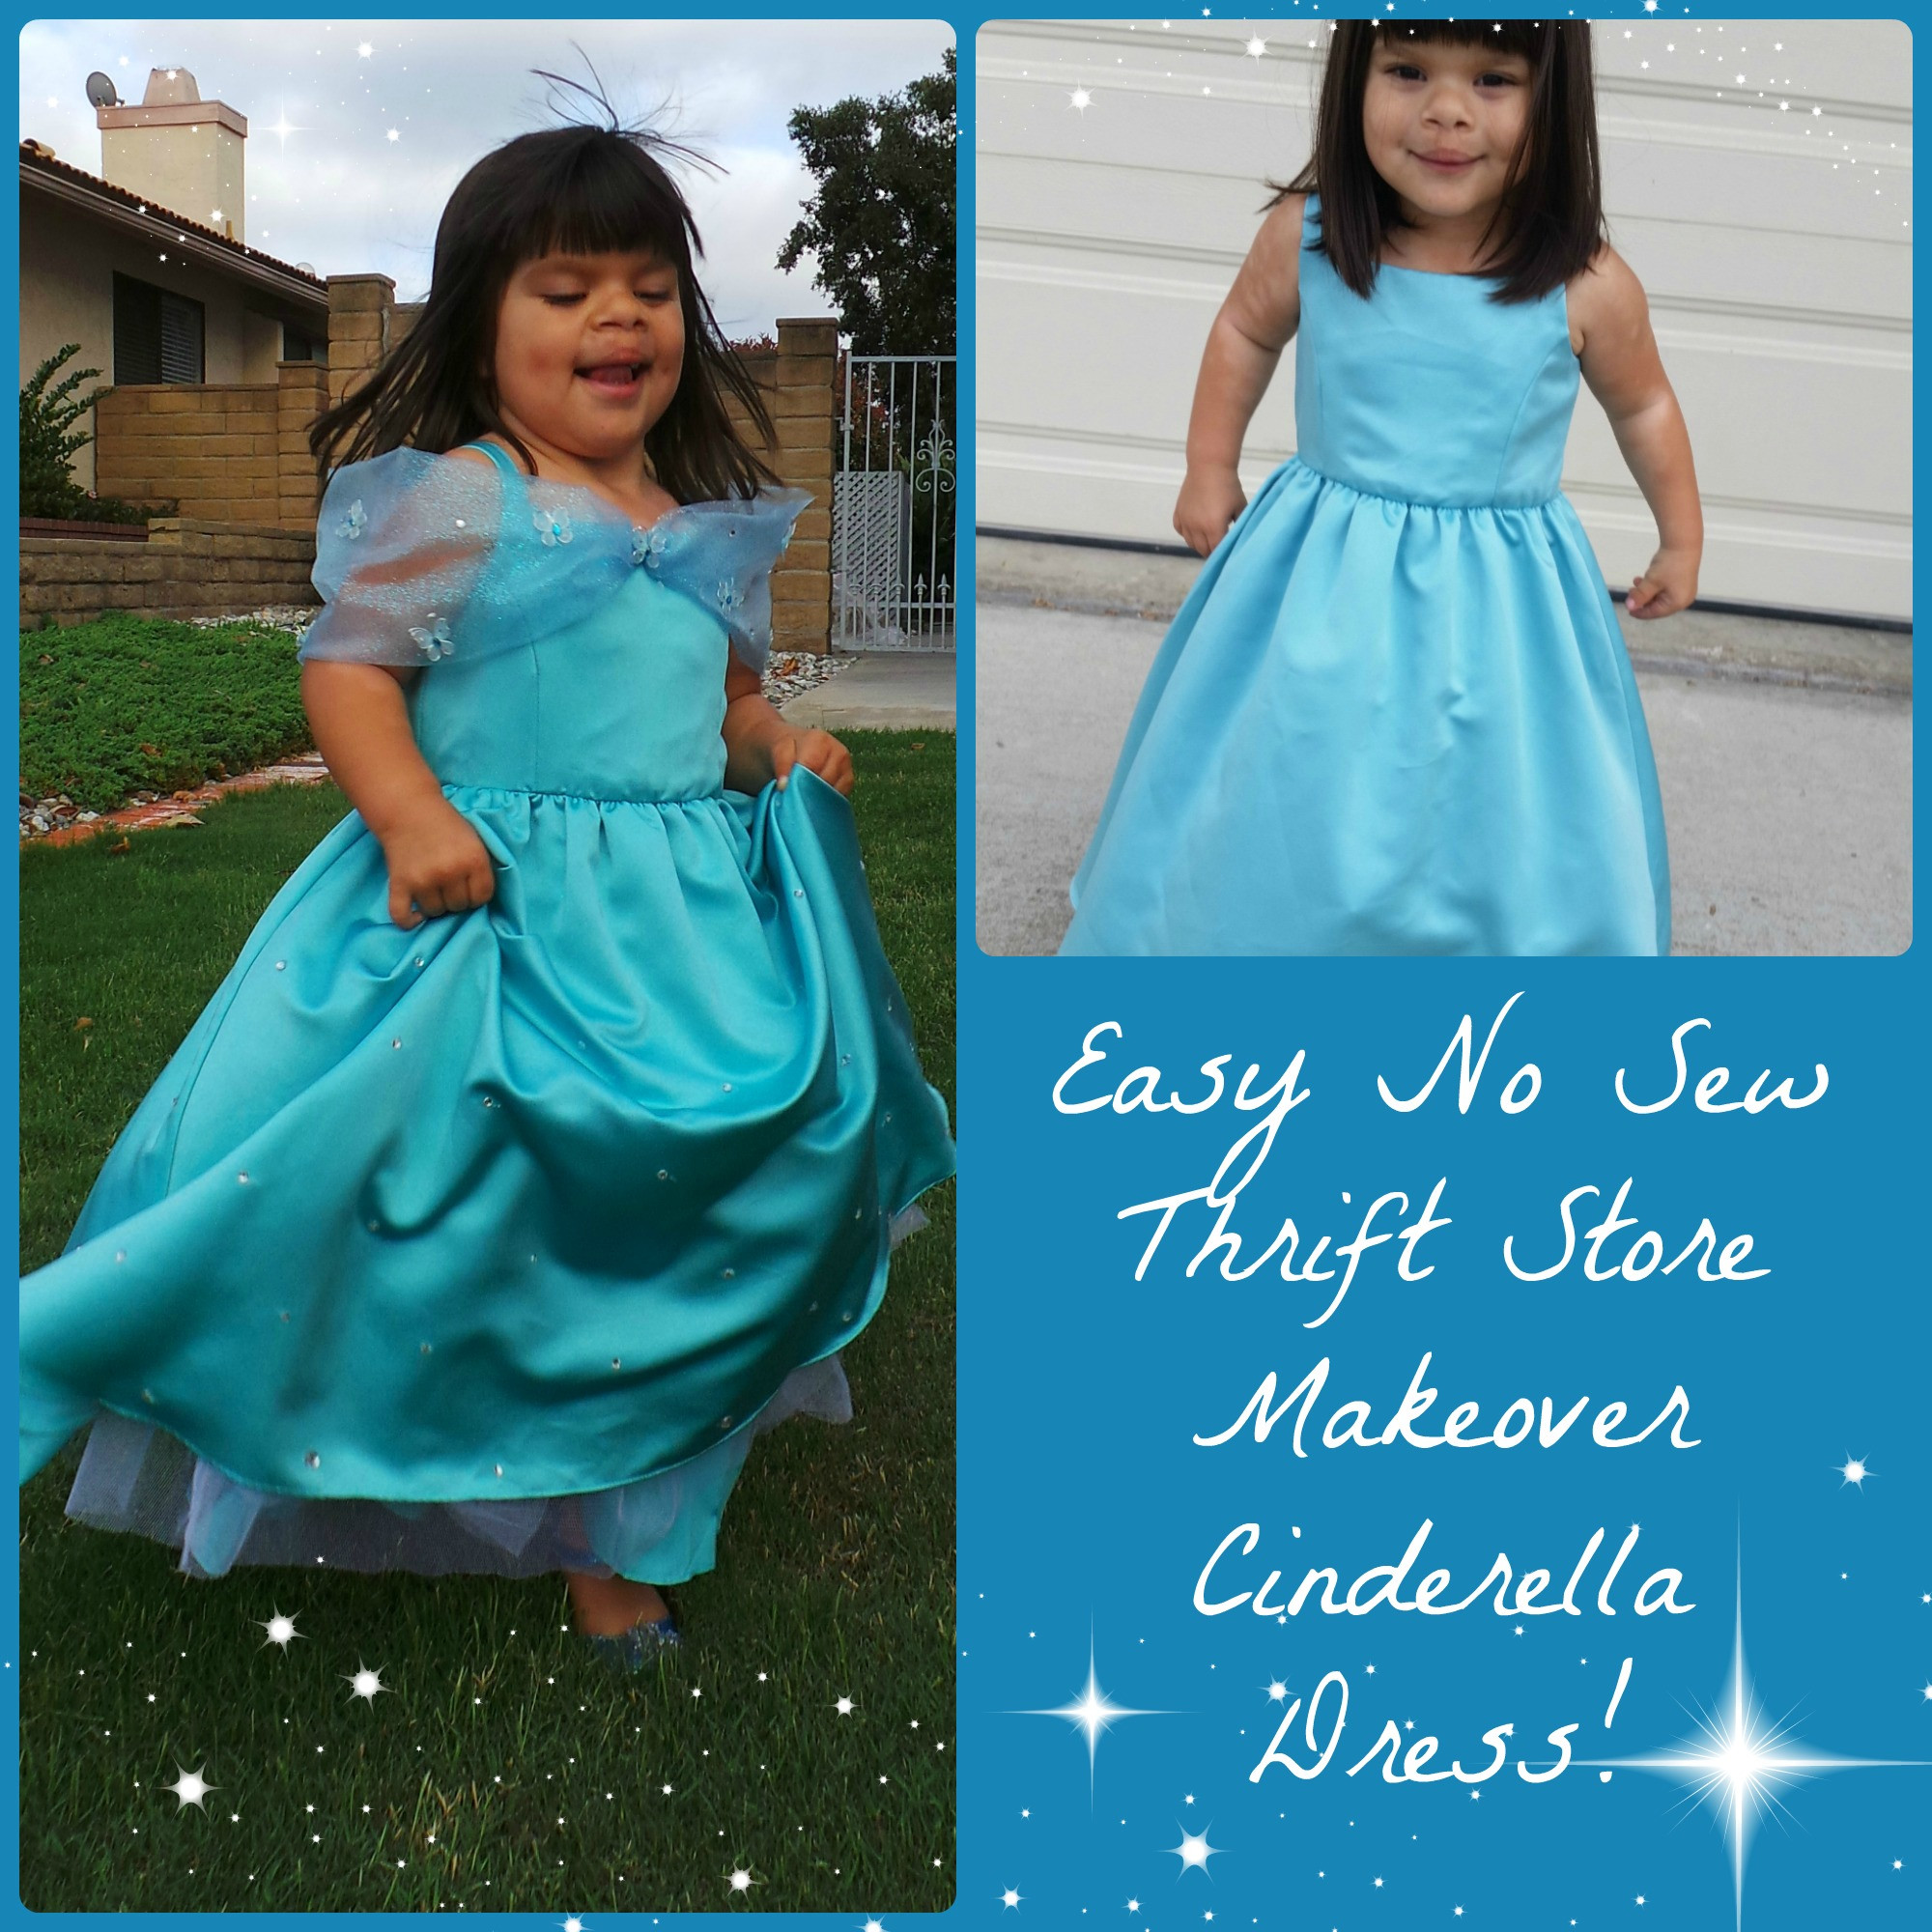 Best ideas about DIY Cinderella Costume
. Save or Pin DIY Cinderella Dress DIY CInderella Costume No Sew Now.